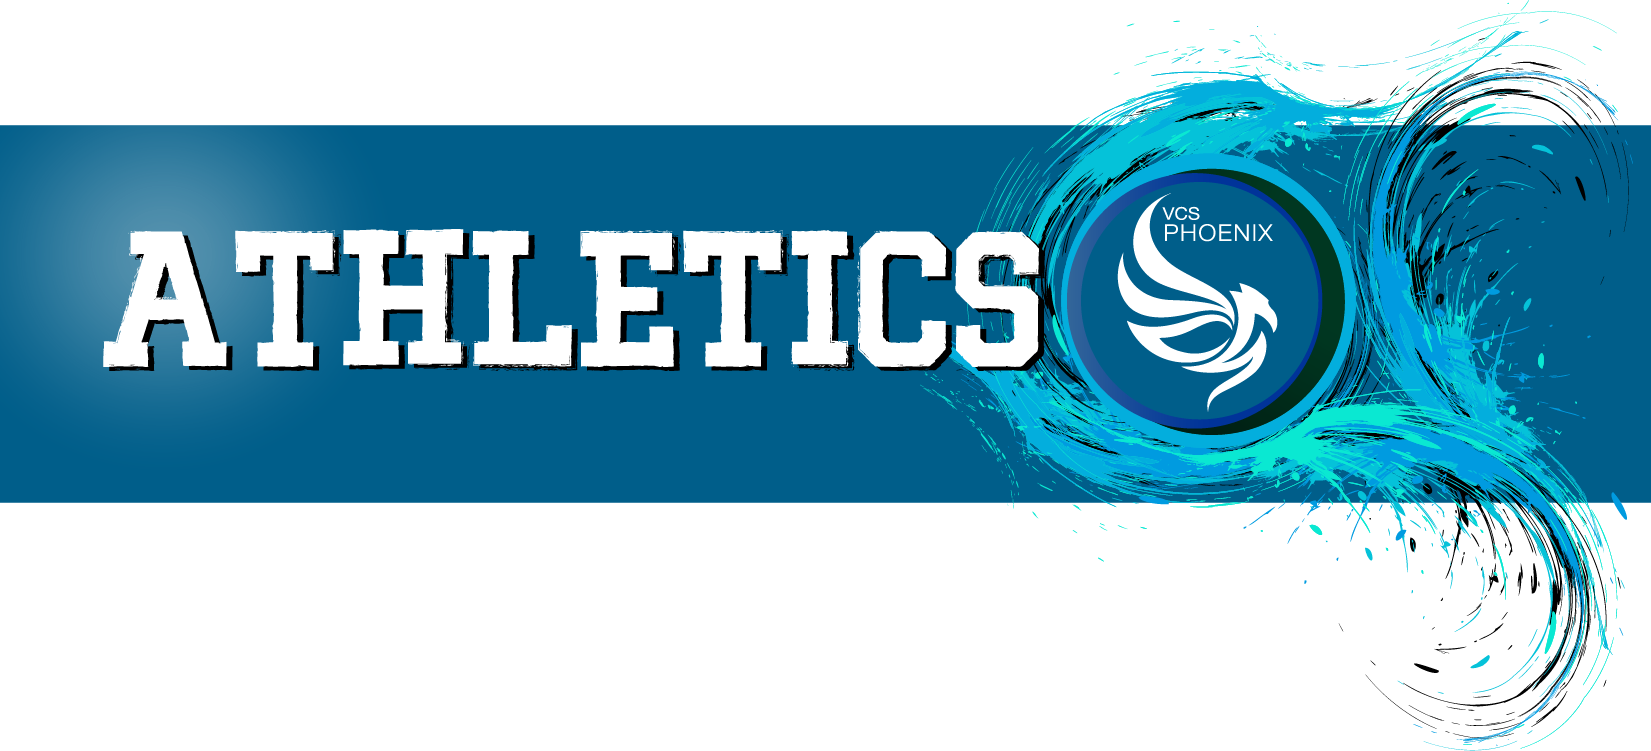 Athletics Banner with VCS Phoenix Logo